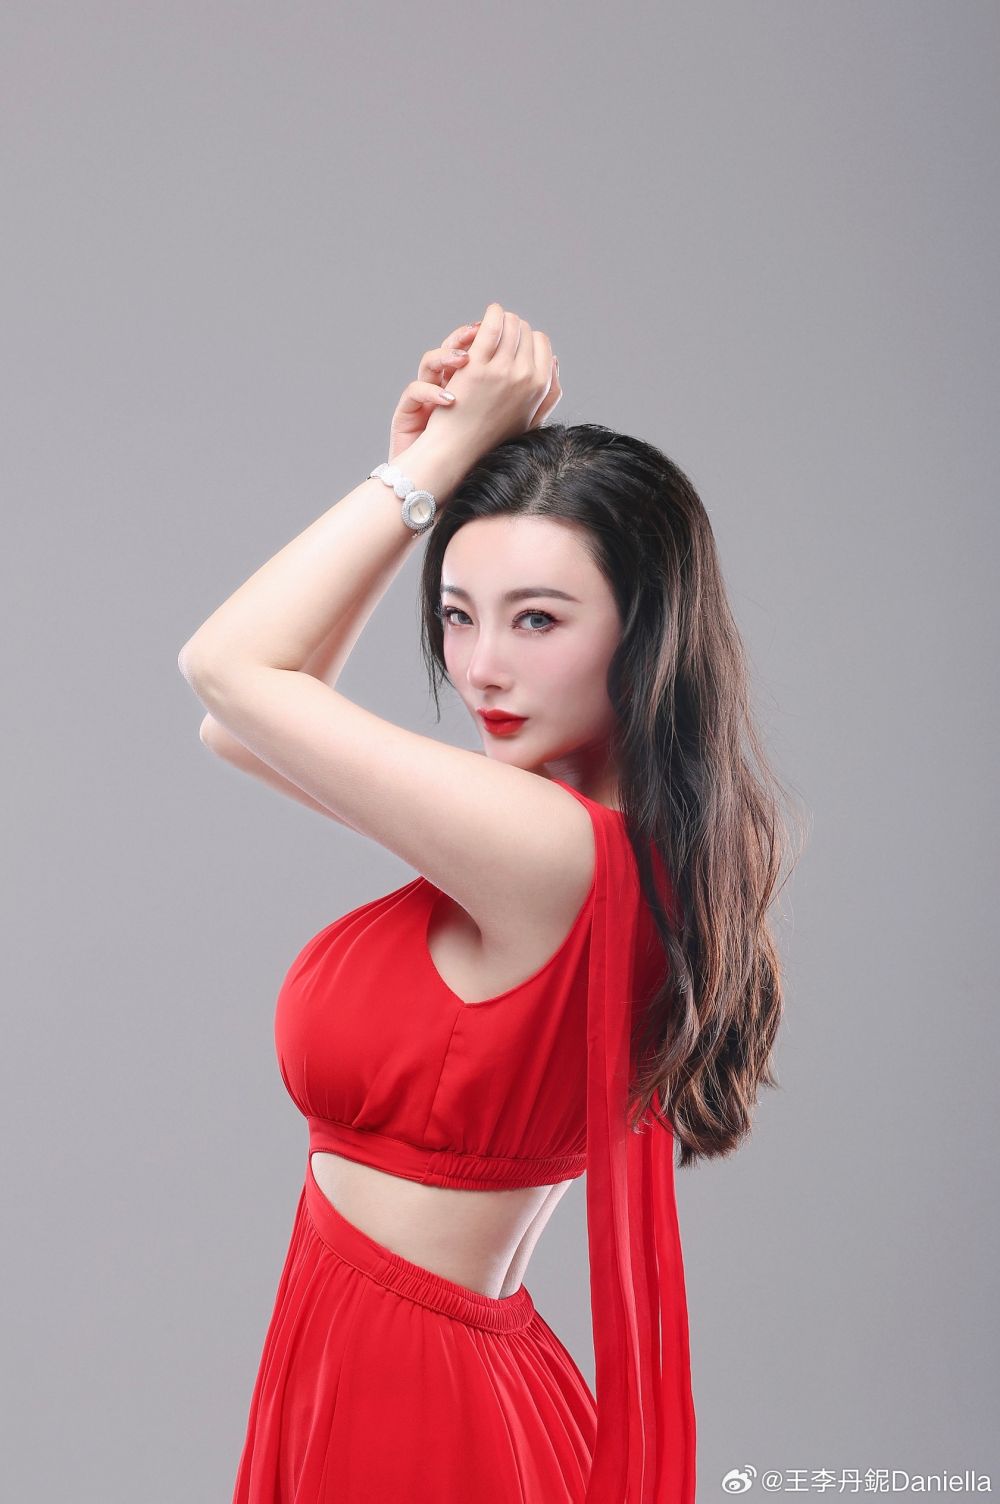 Daniella Wang Sexy and Hottest Photos , Latest Pics